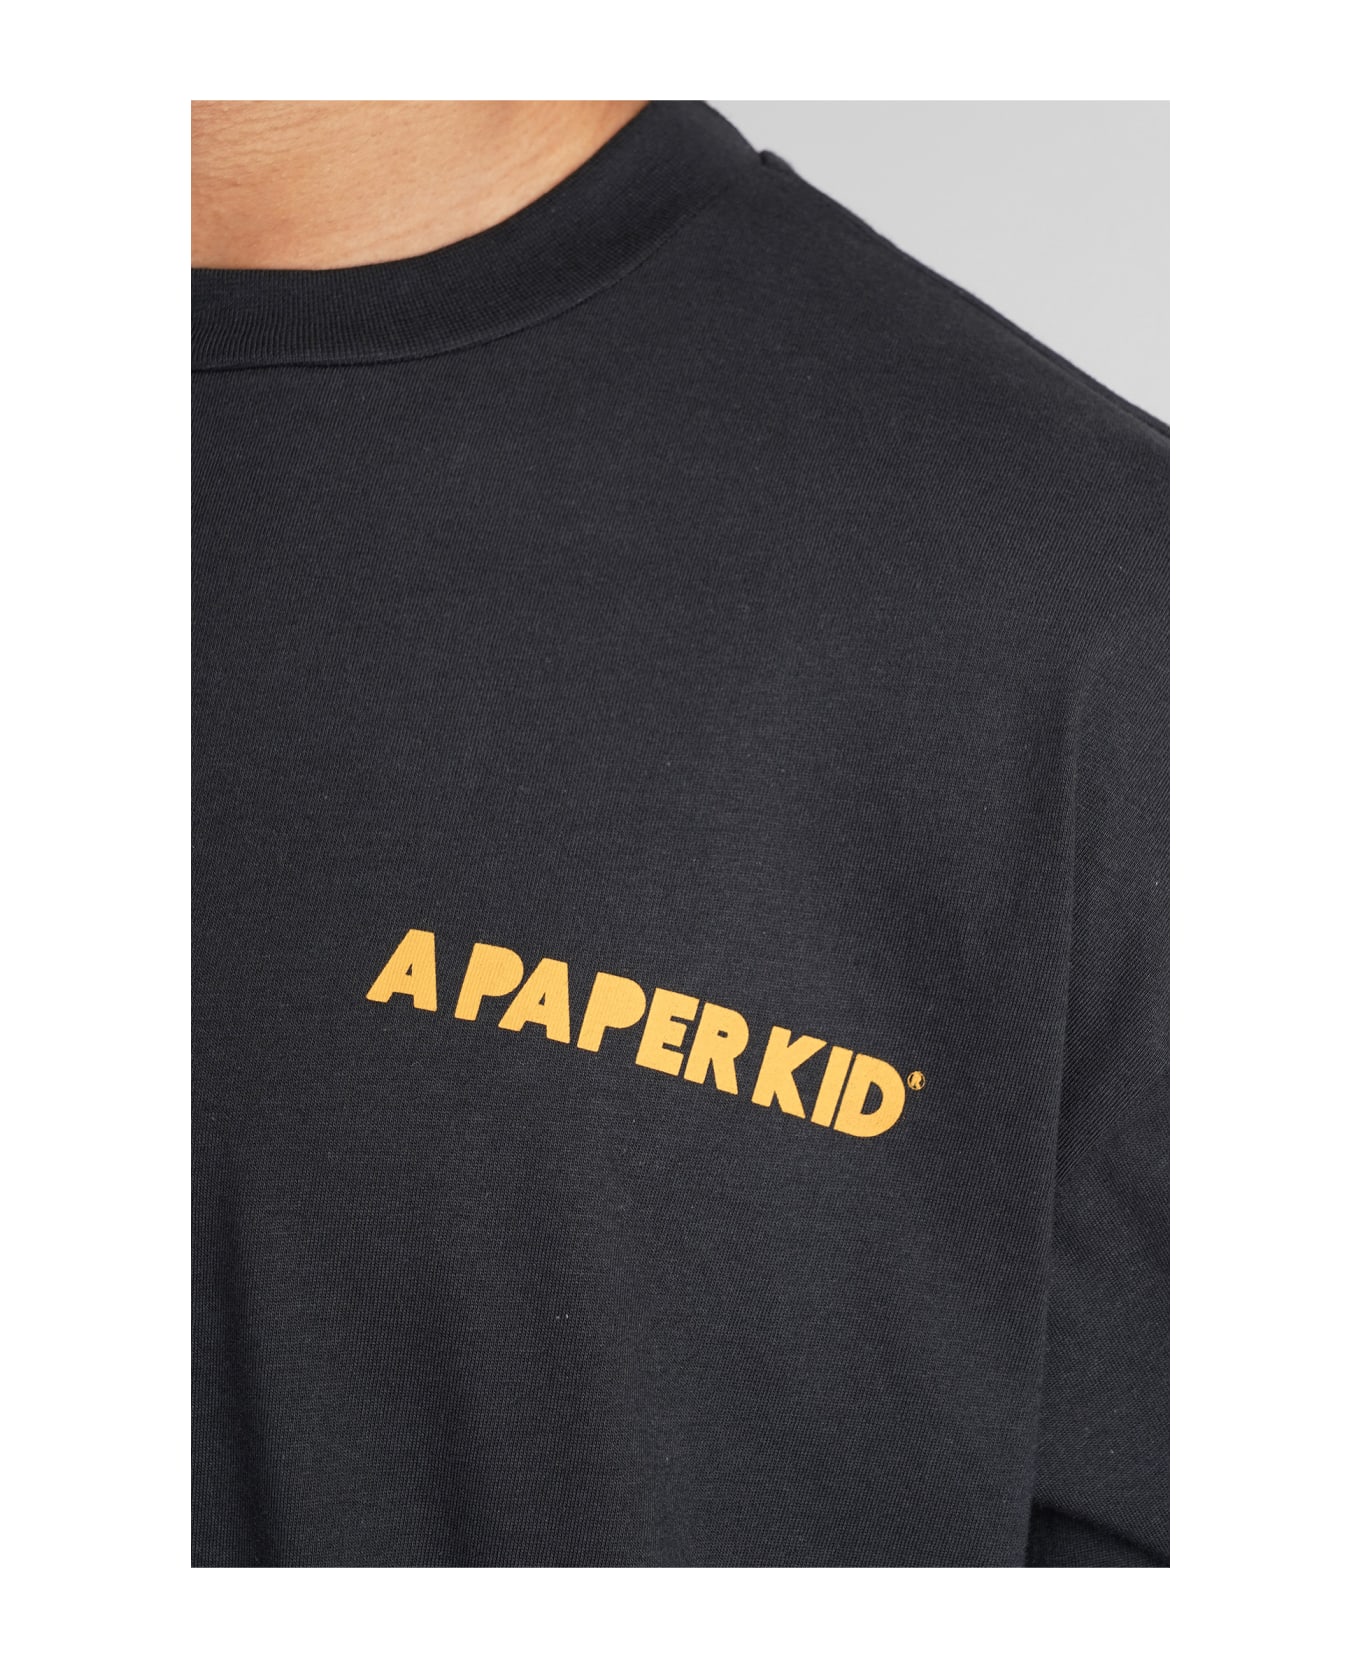 A Paper Kid T-shirt In Black Cotton - black